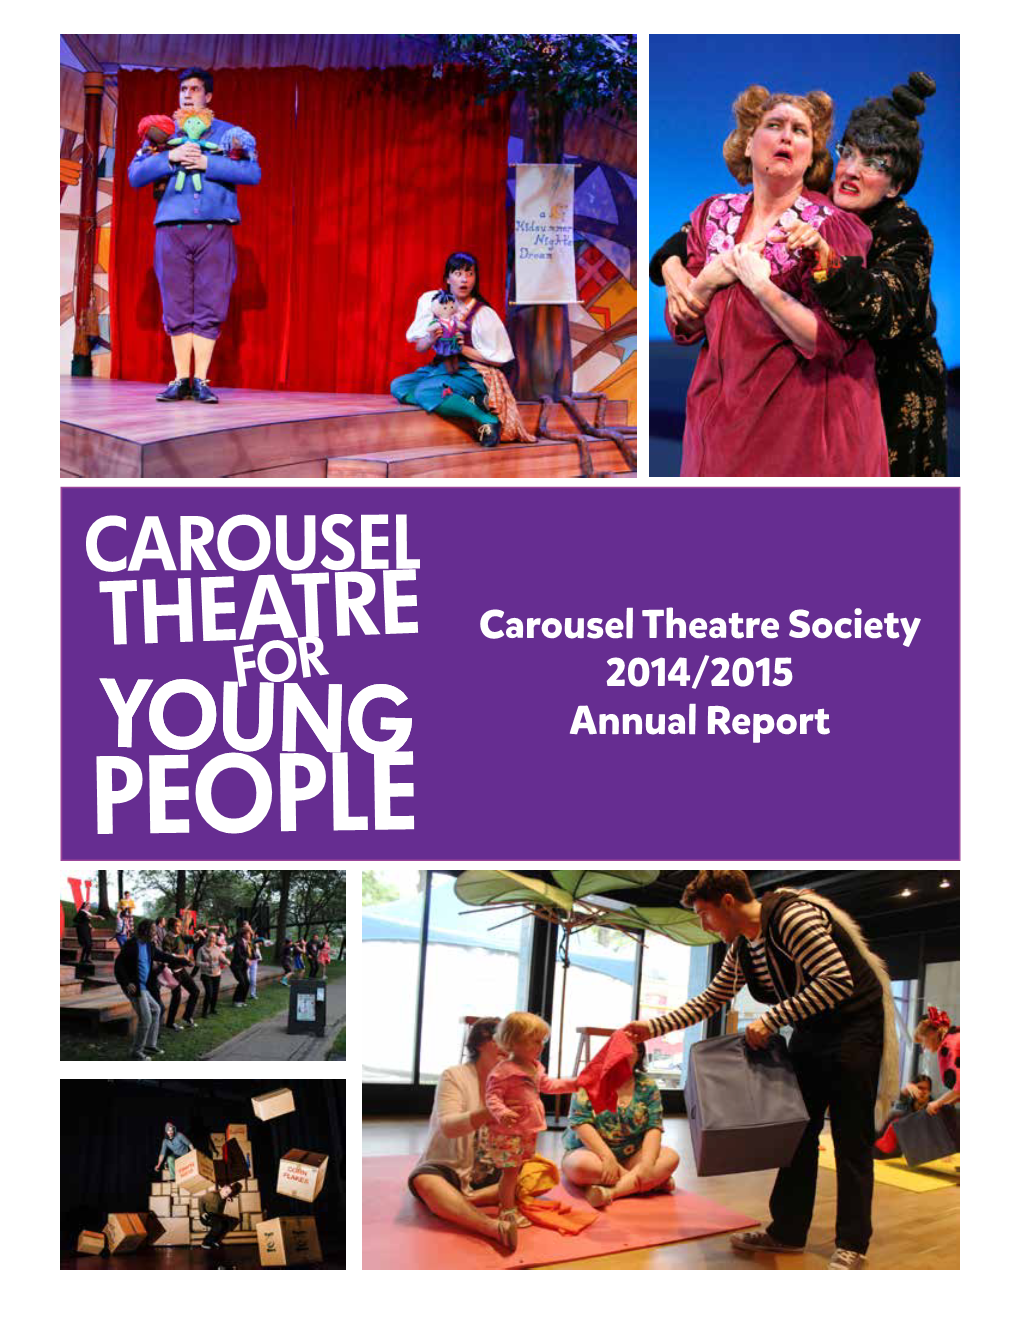 Carousel Theatre Society 2014/2015 Annual Report